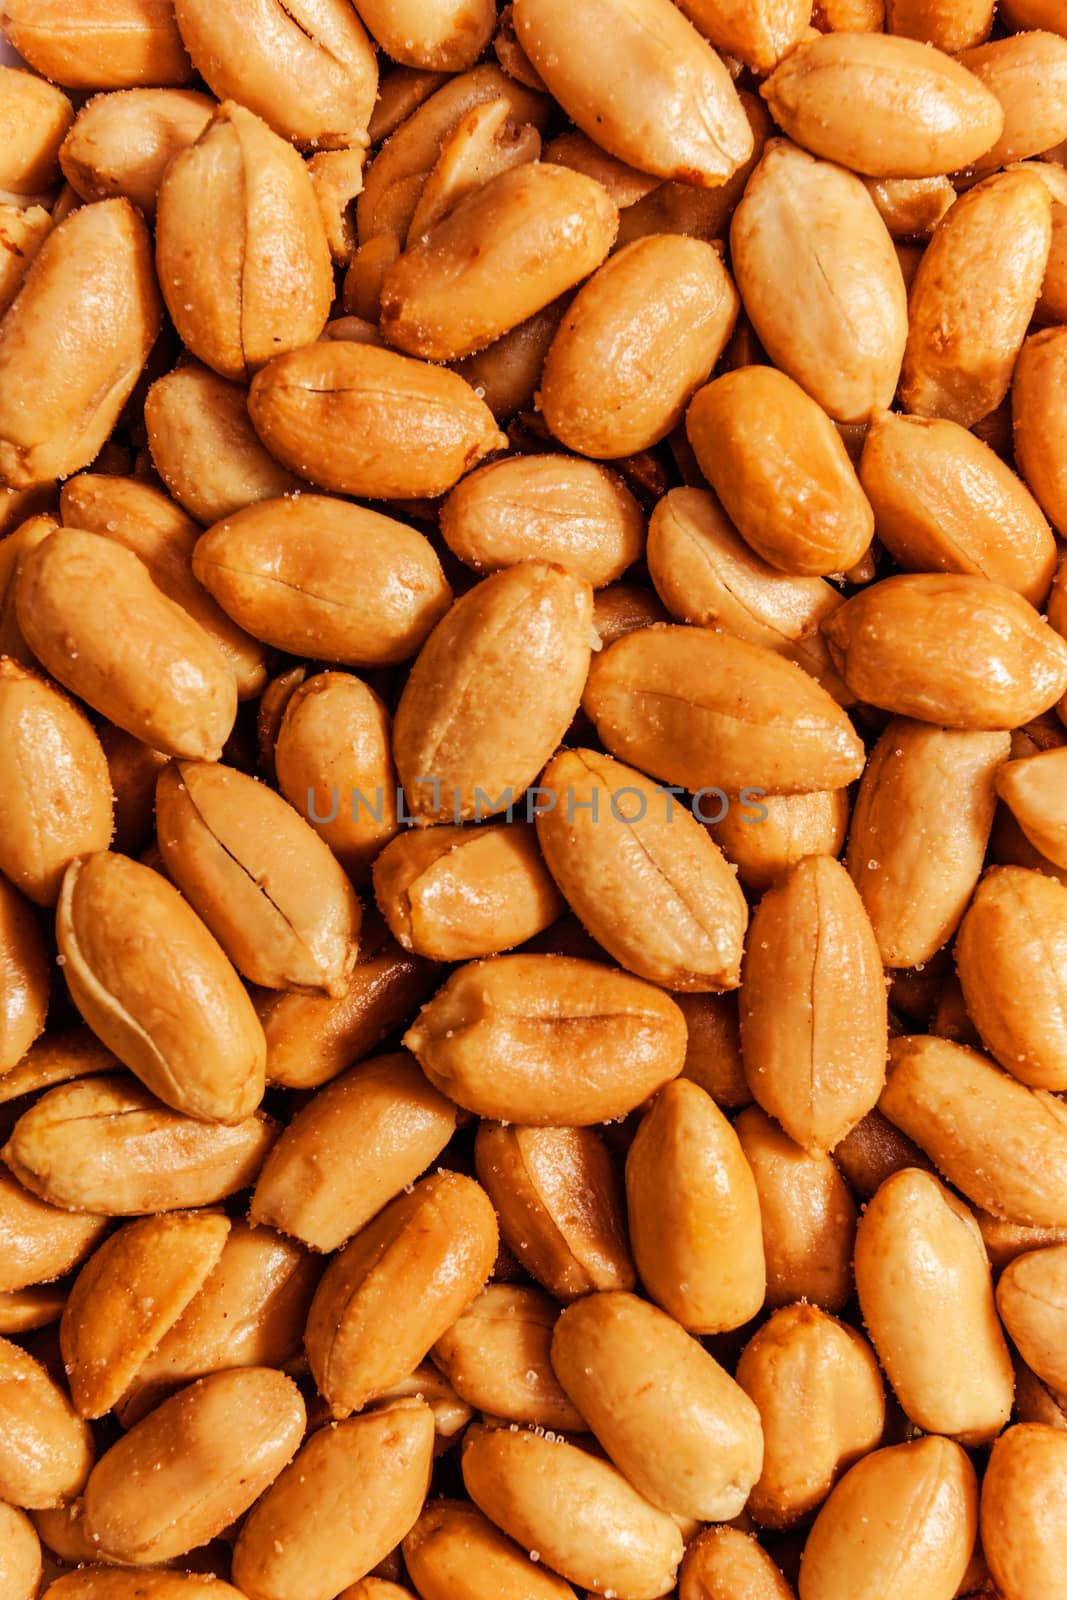 peanuts by vladimirnenezic